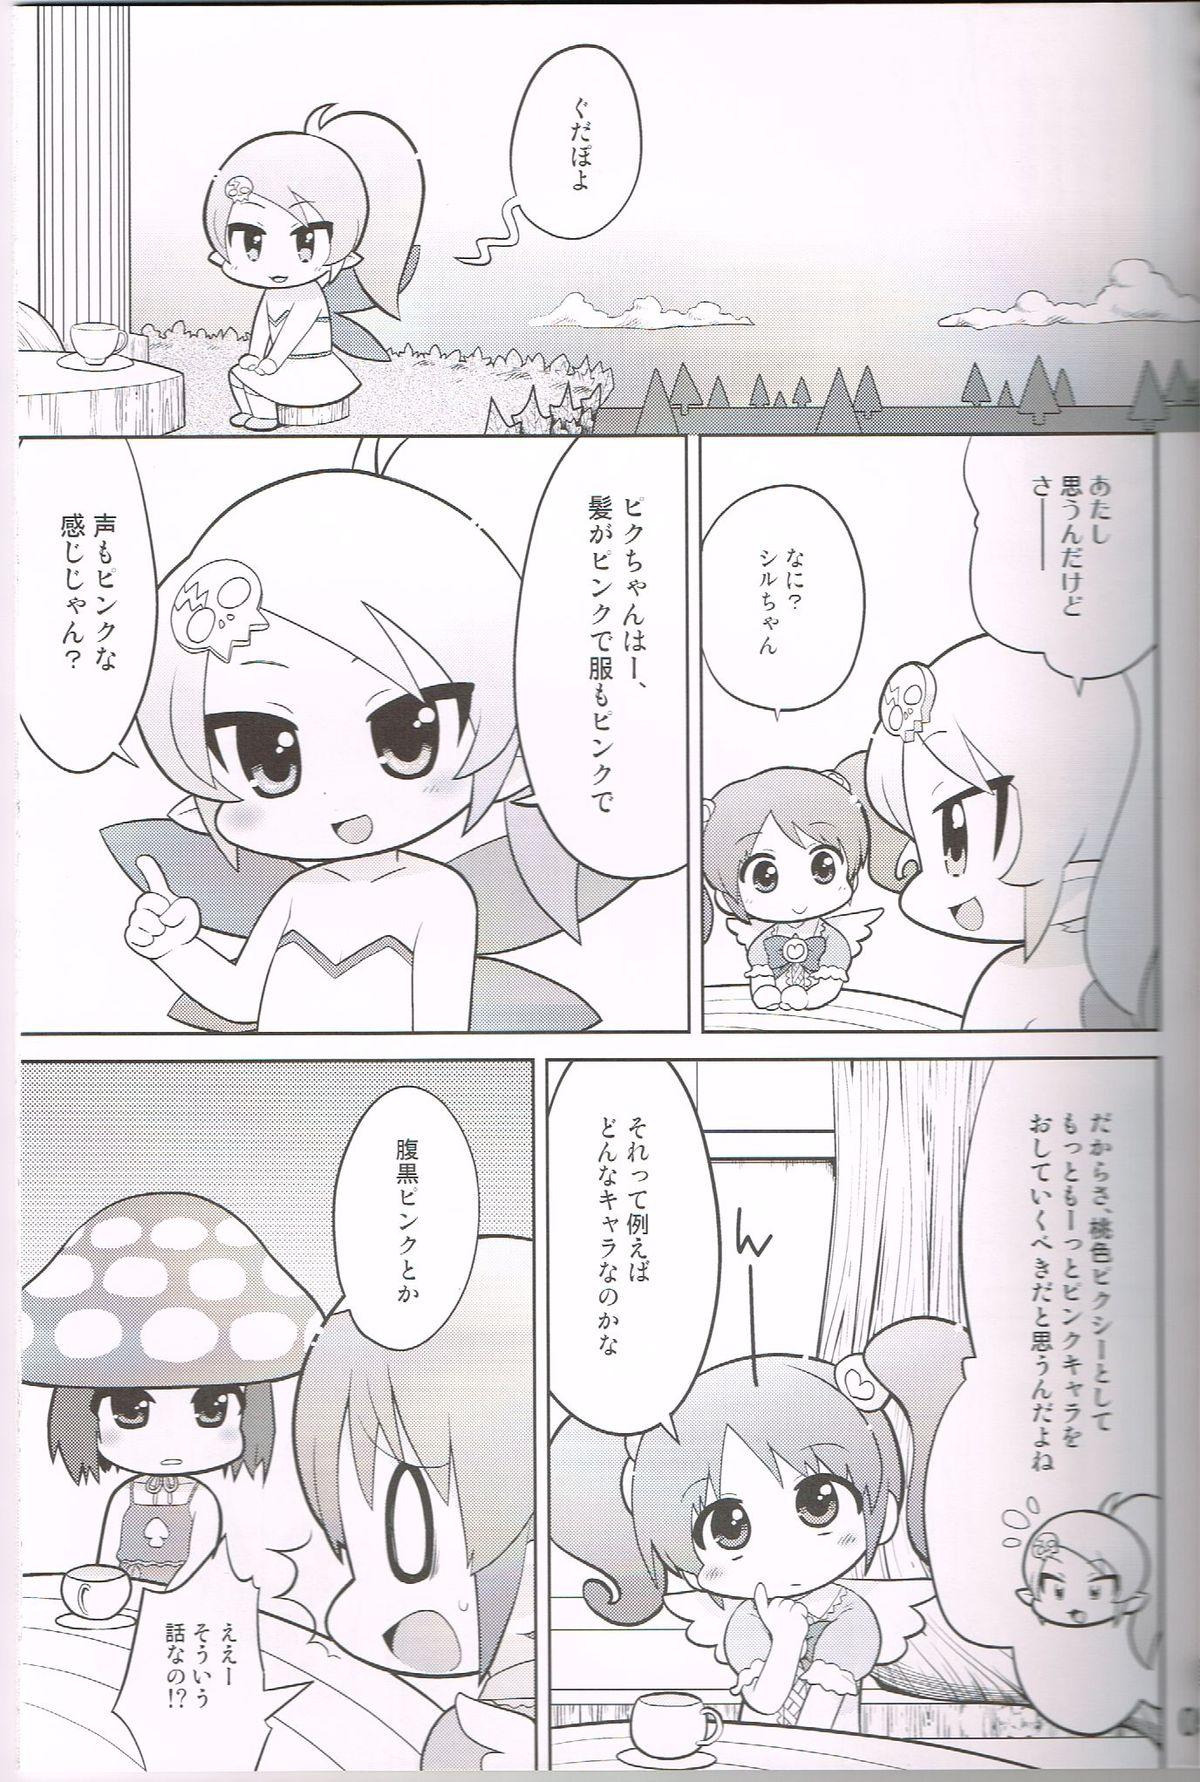 Cheat Momoirotoiki - Gdgd fairies Anime - Page 4